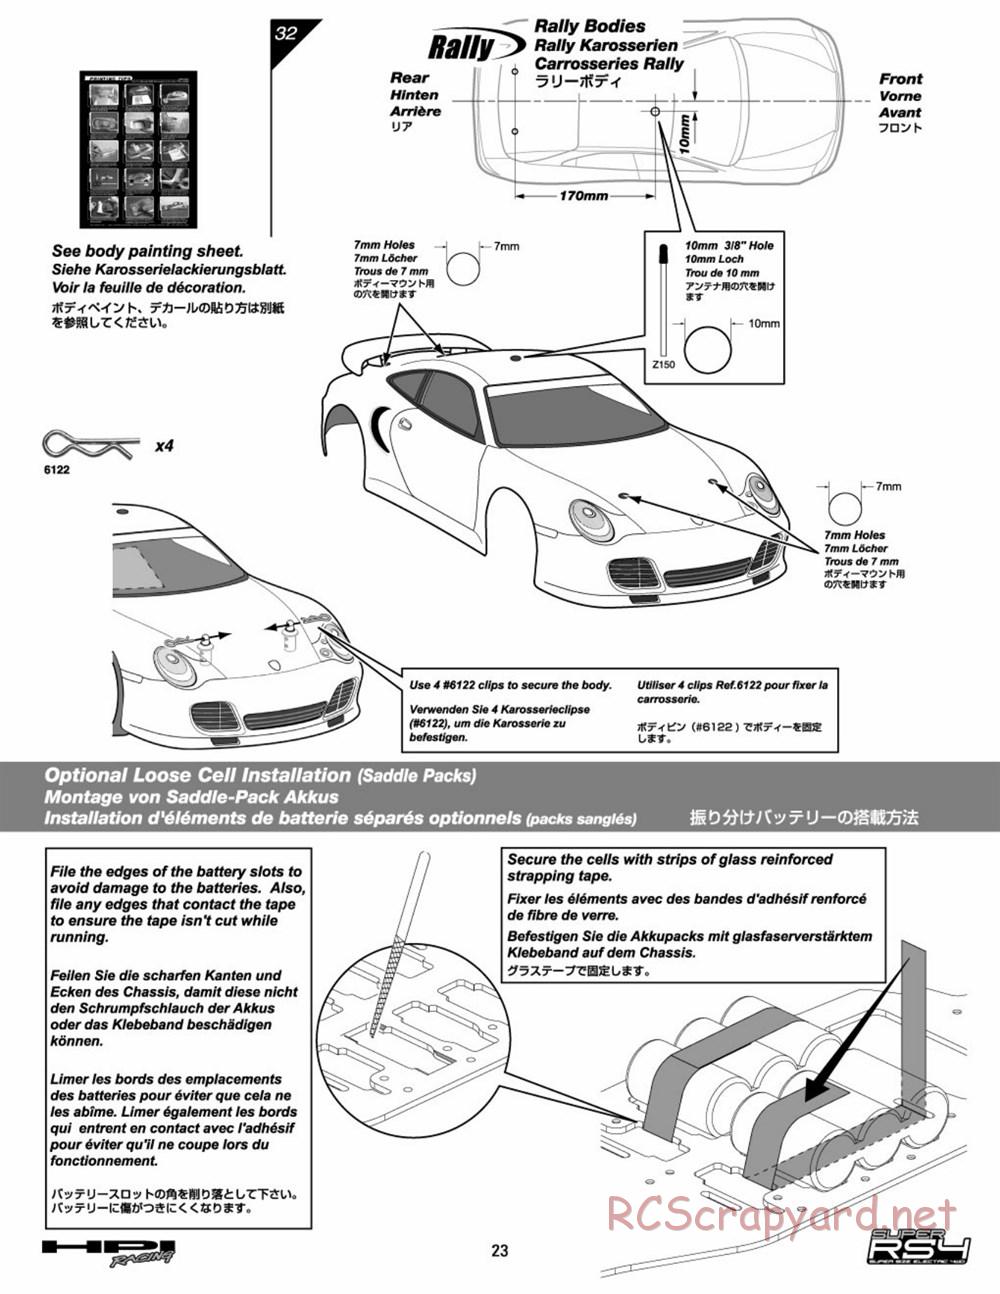 HPI - Super RS4 - Manual - Page 22